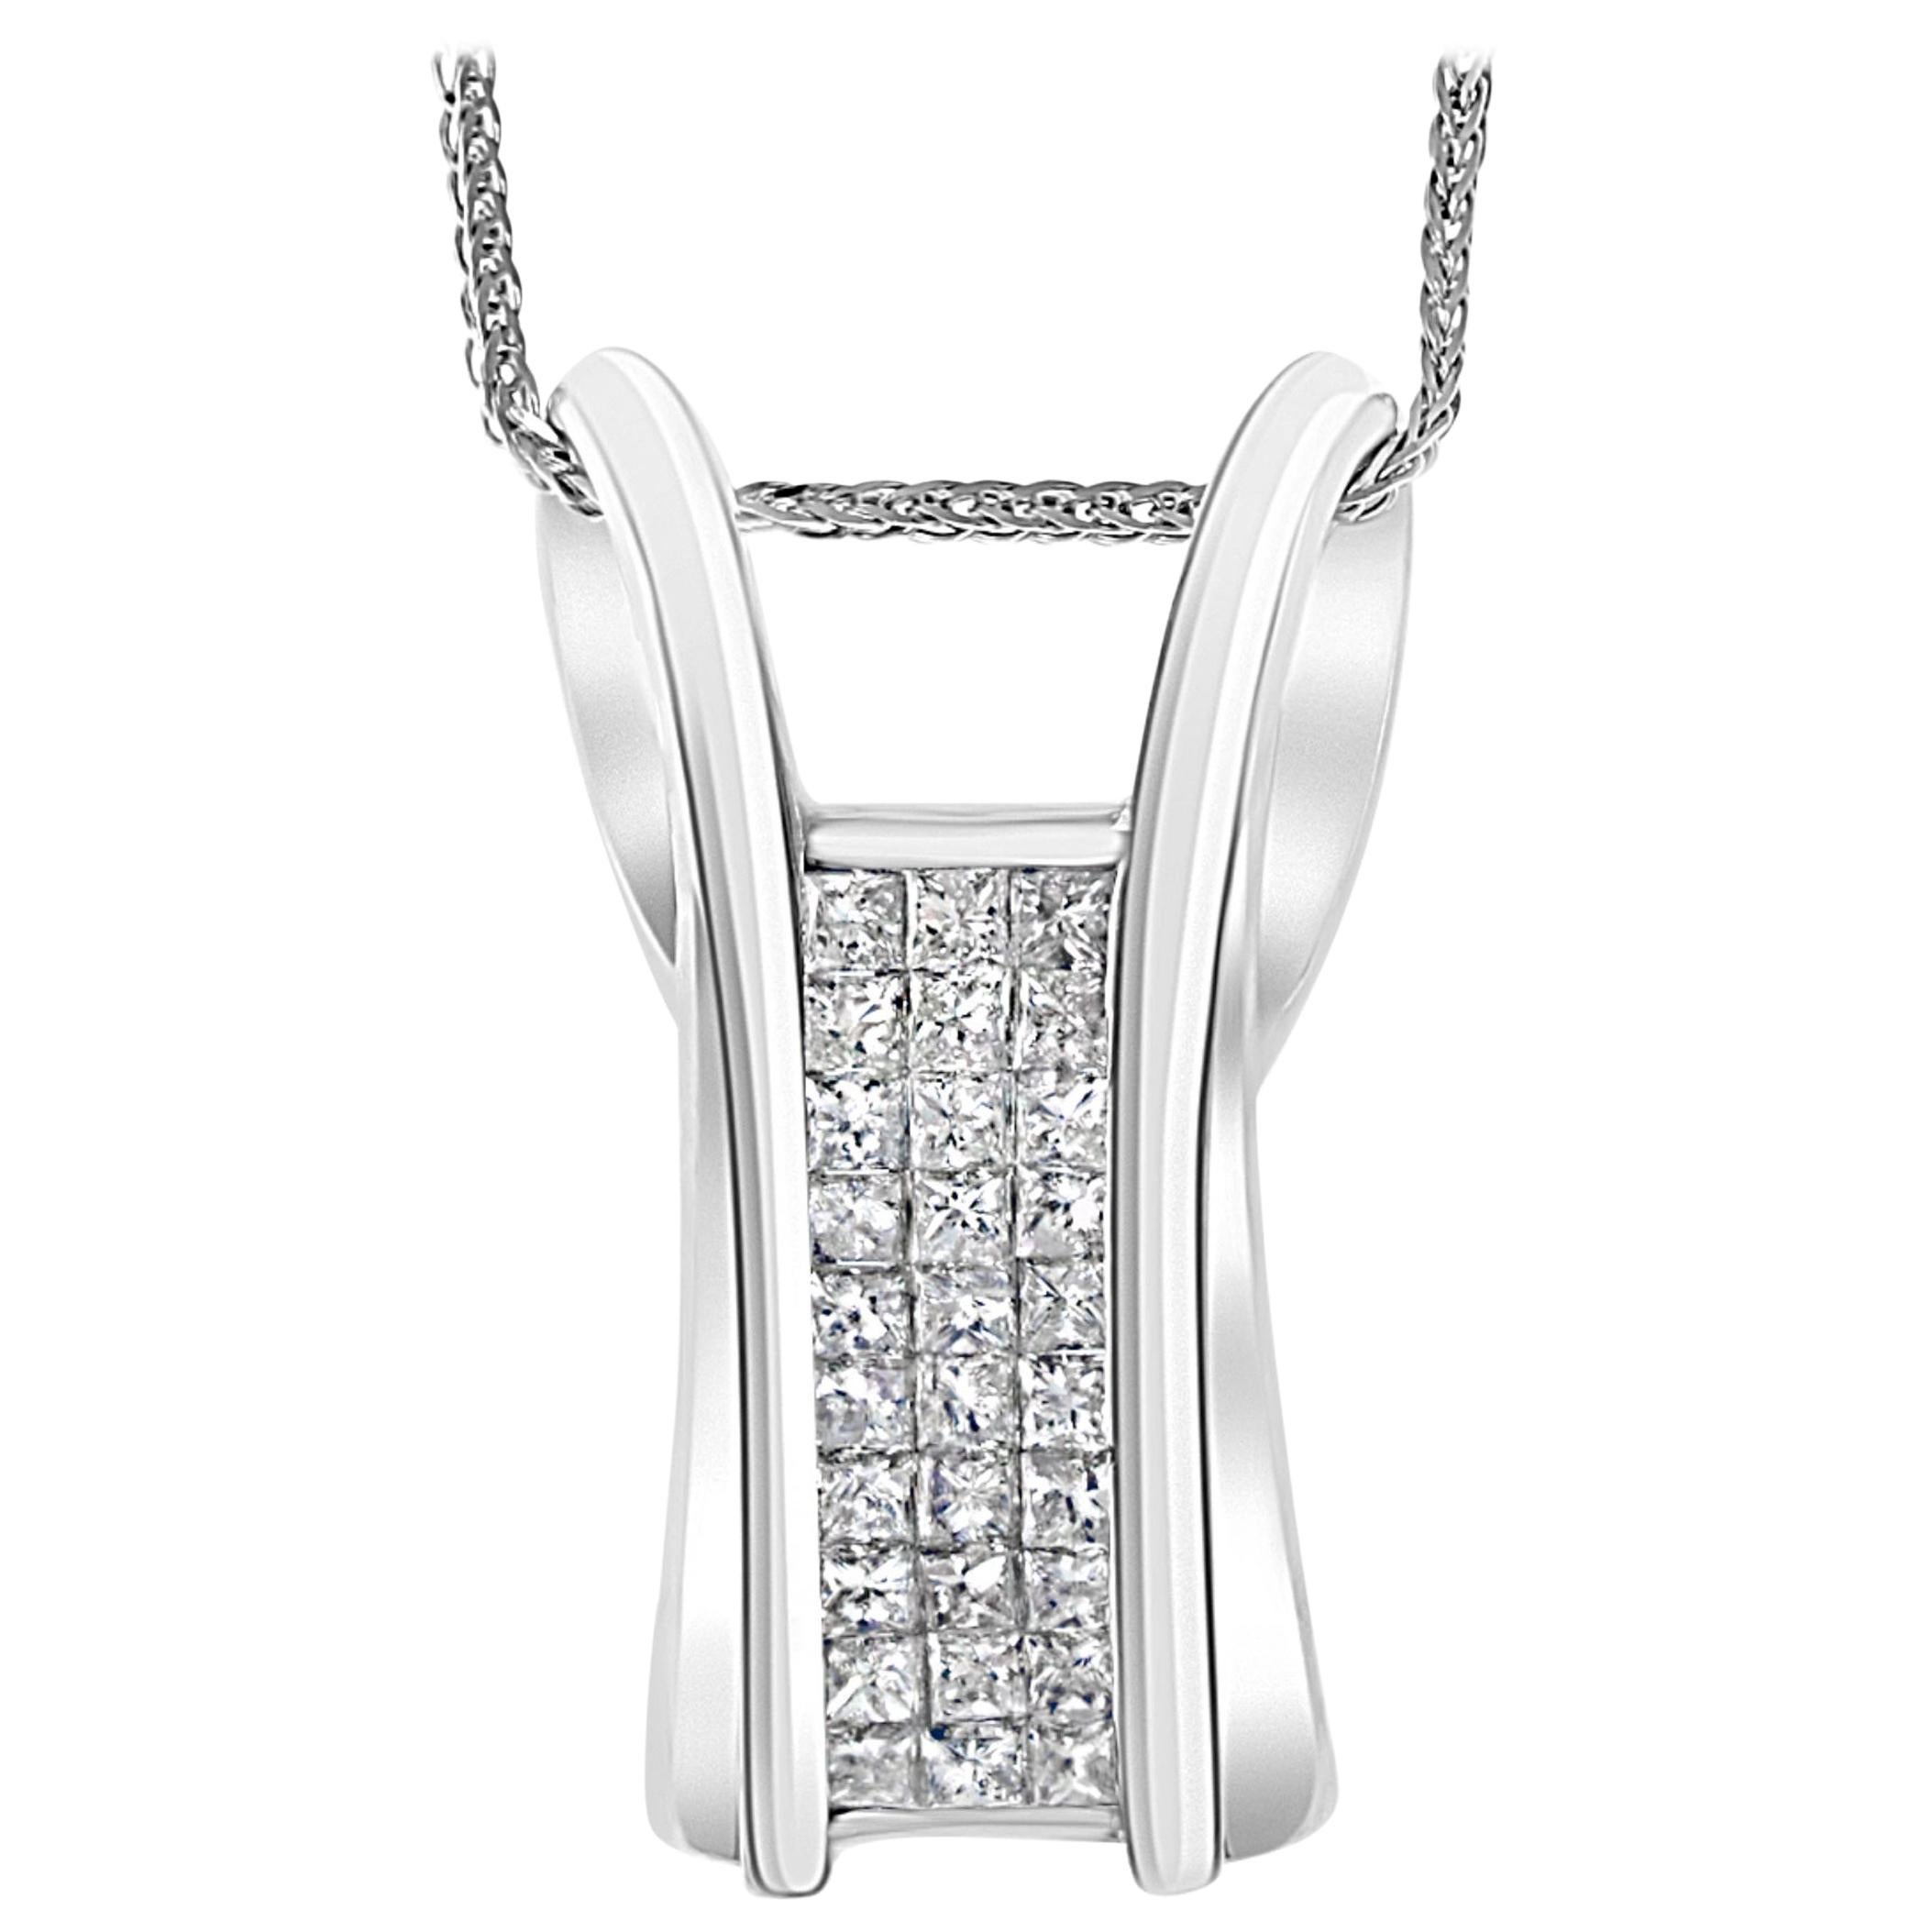 2.2 Carat Princess Cut Diamond Pendant/ Necklace 14 Karat White Gold with Chain